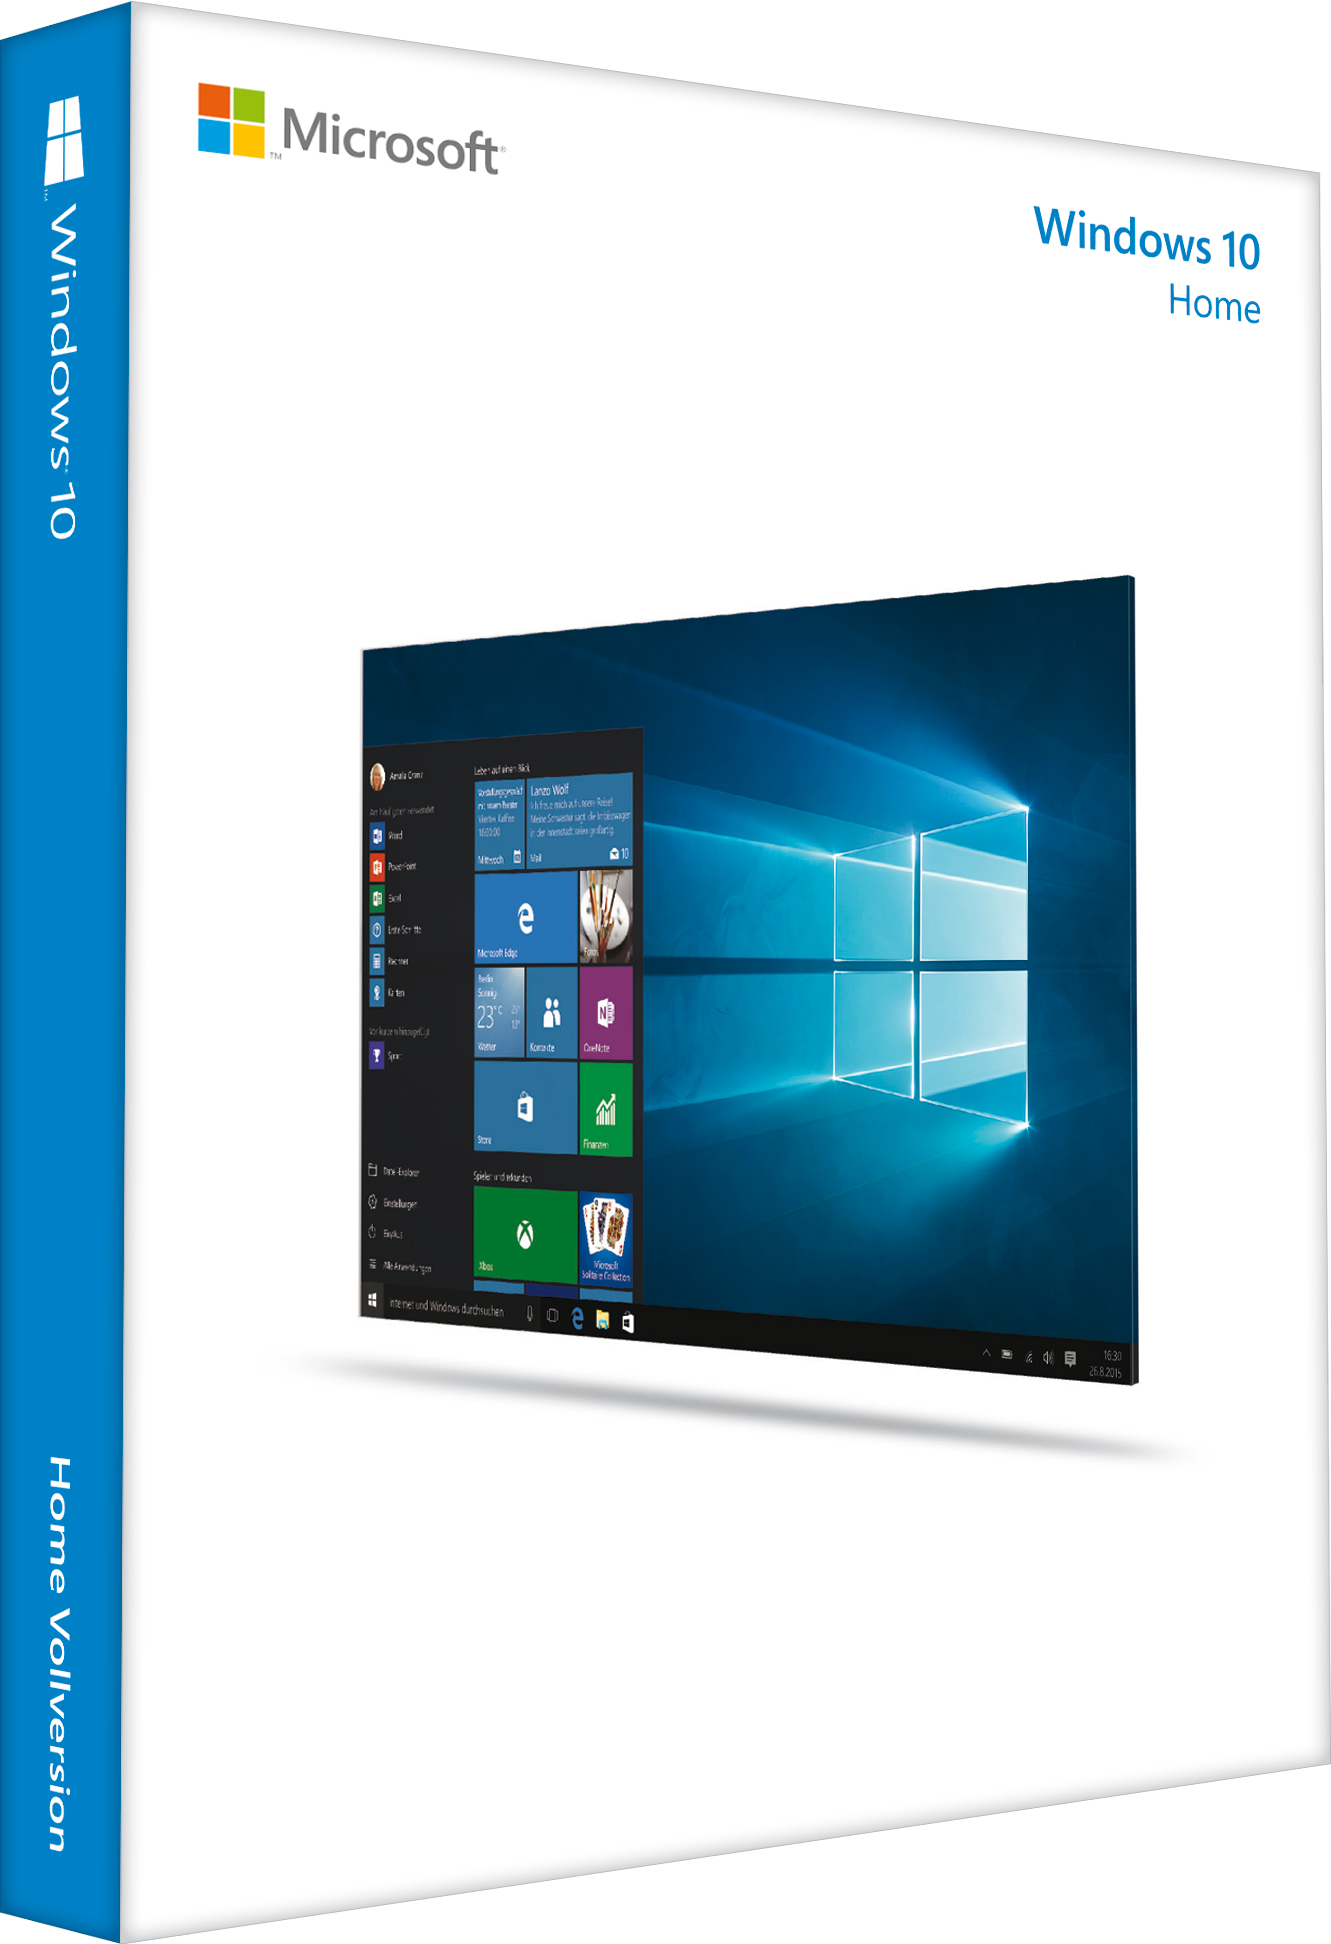 Microsoft Windows 10 Home 64-Bit SBV | ARLT Computer